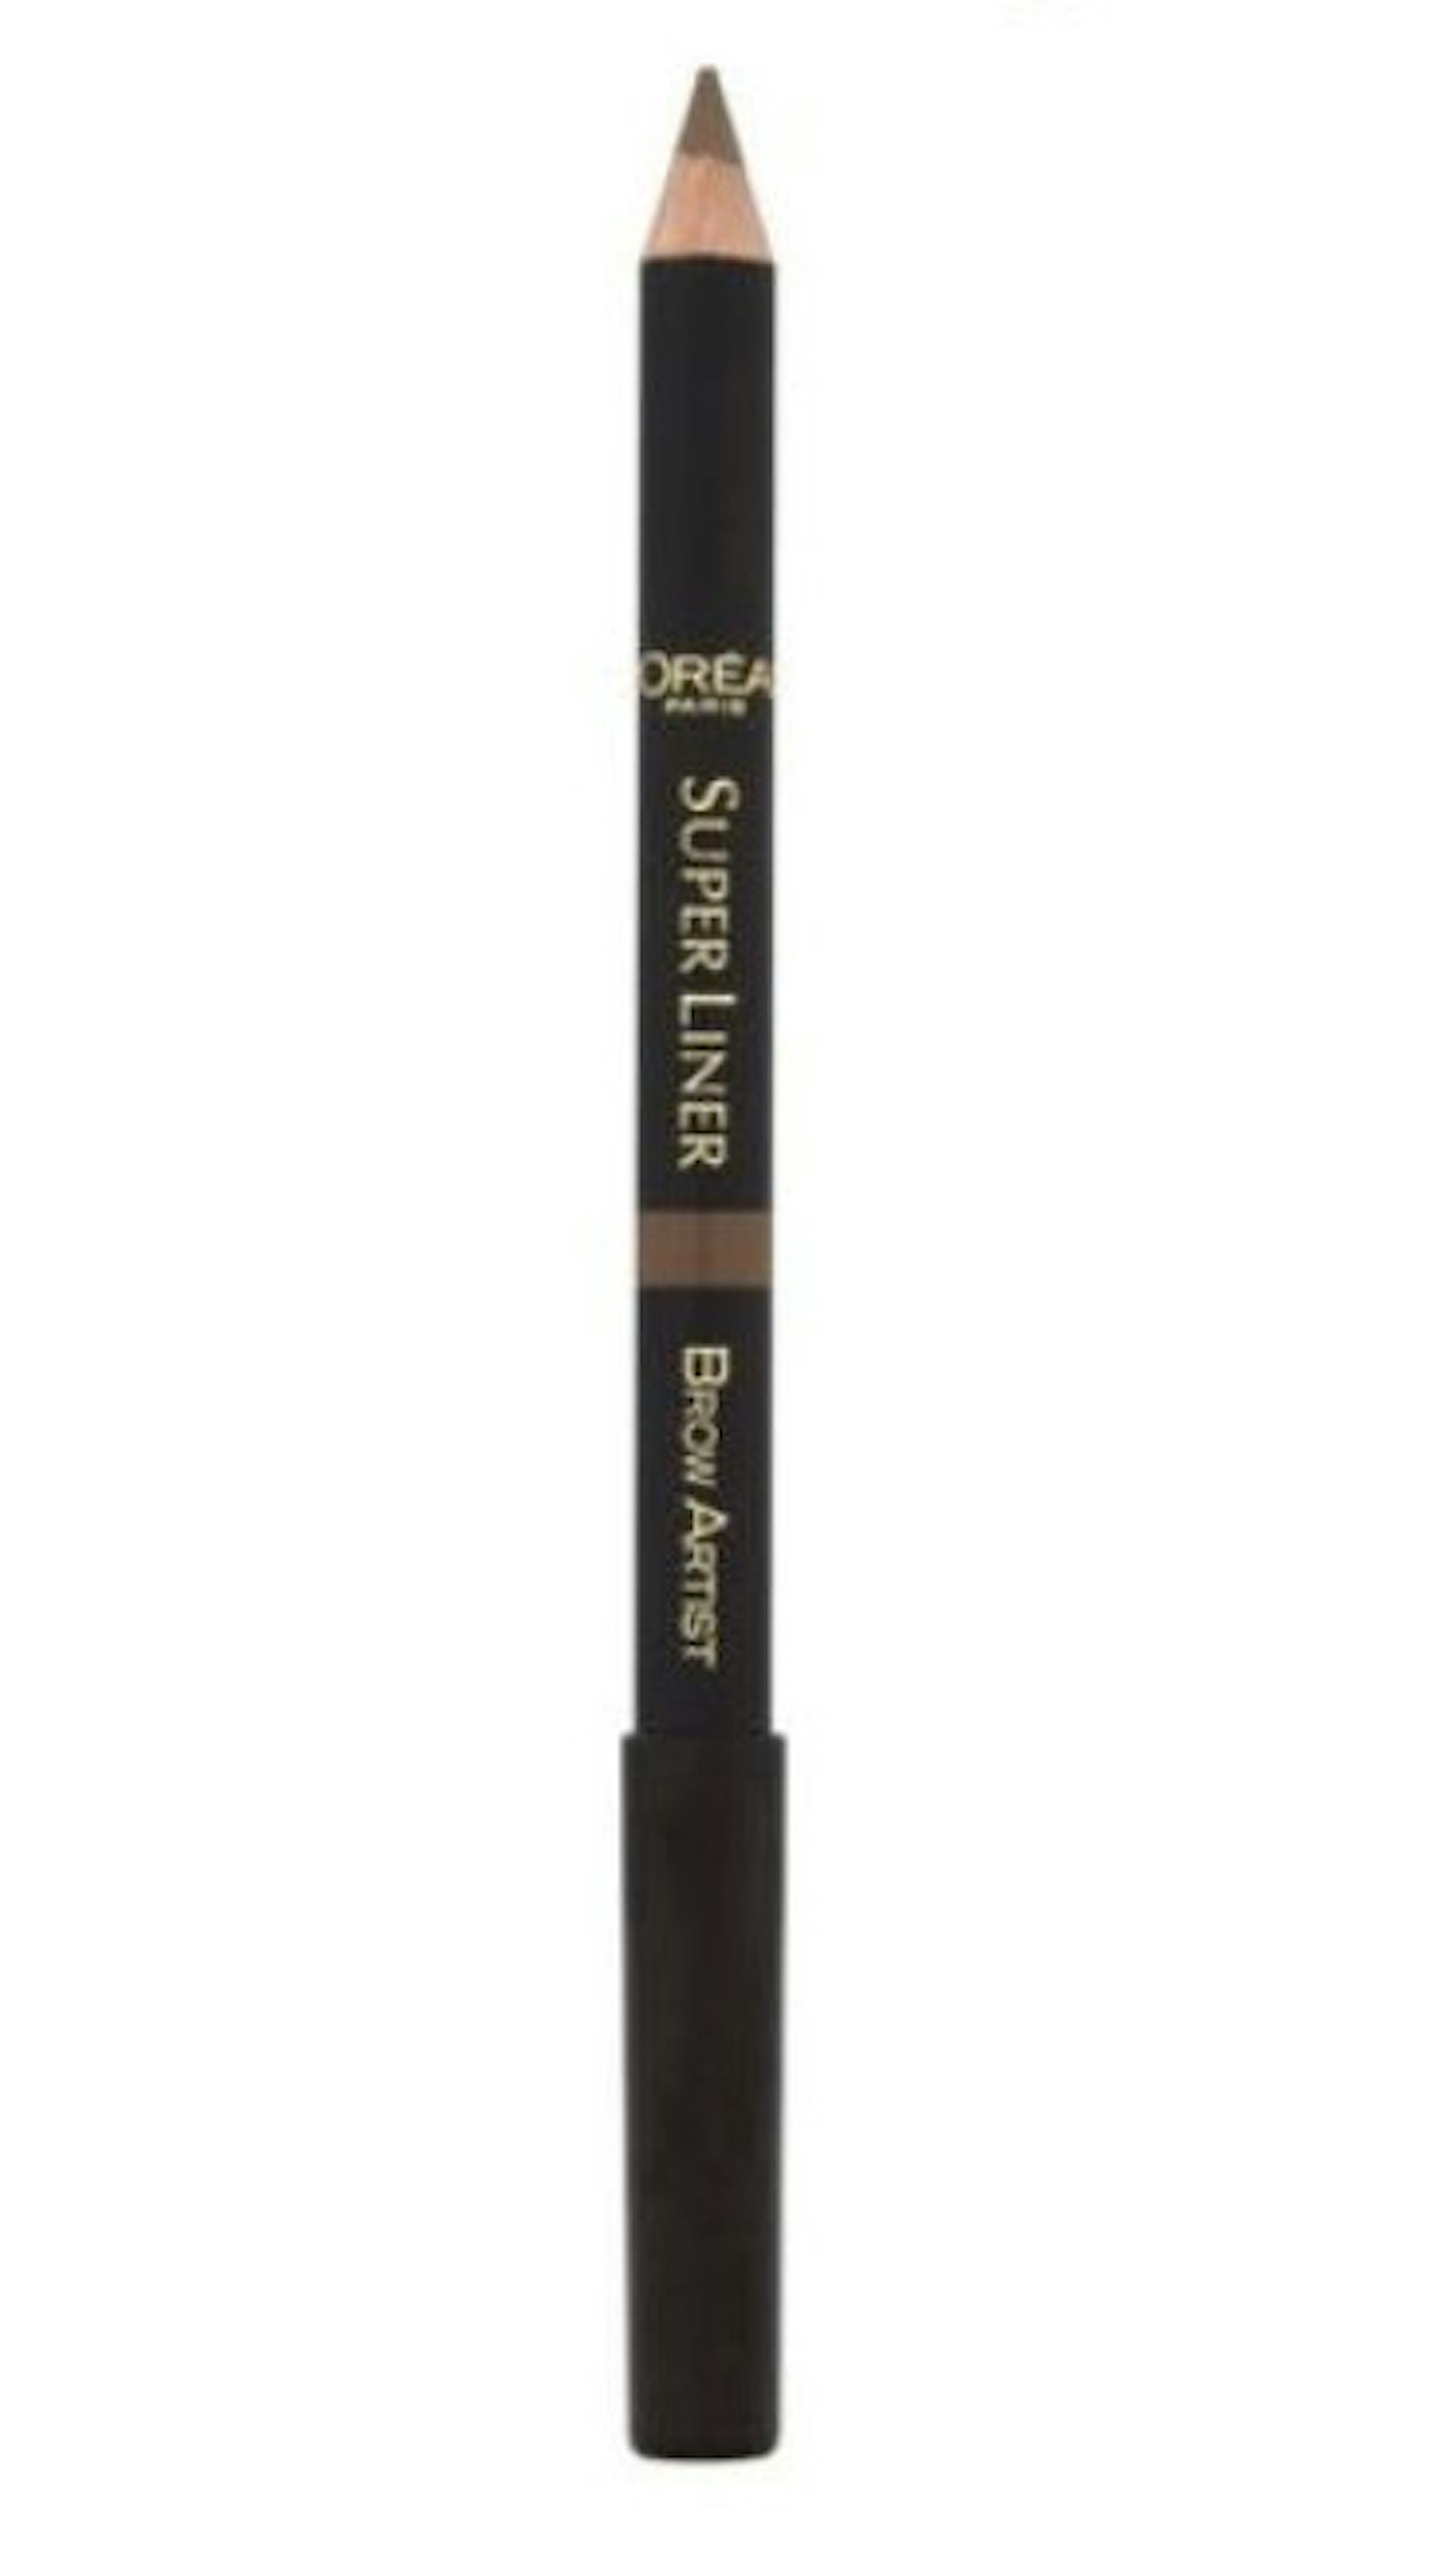 L'Oreal Brow Artiste Pencil £5.49